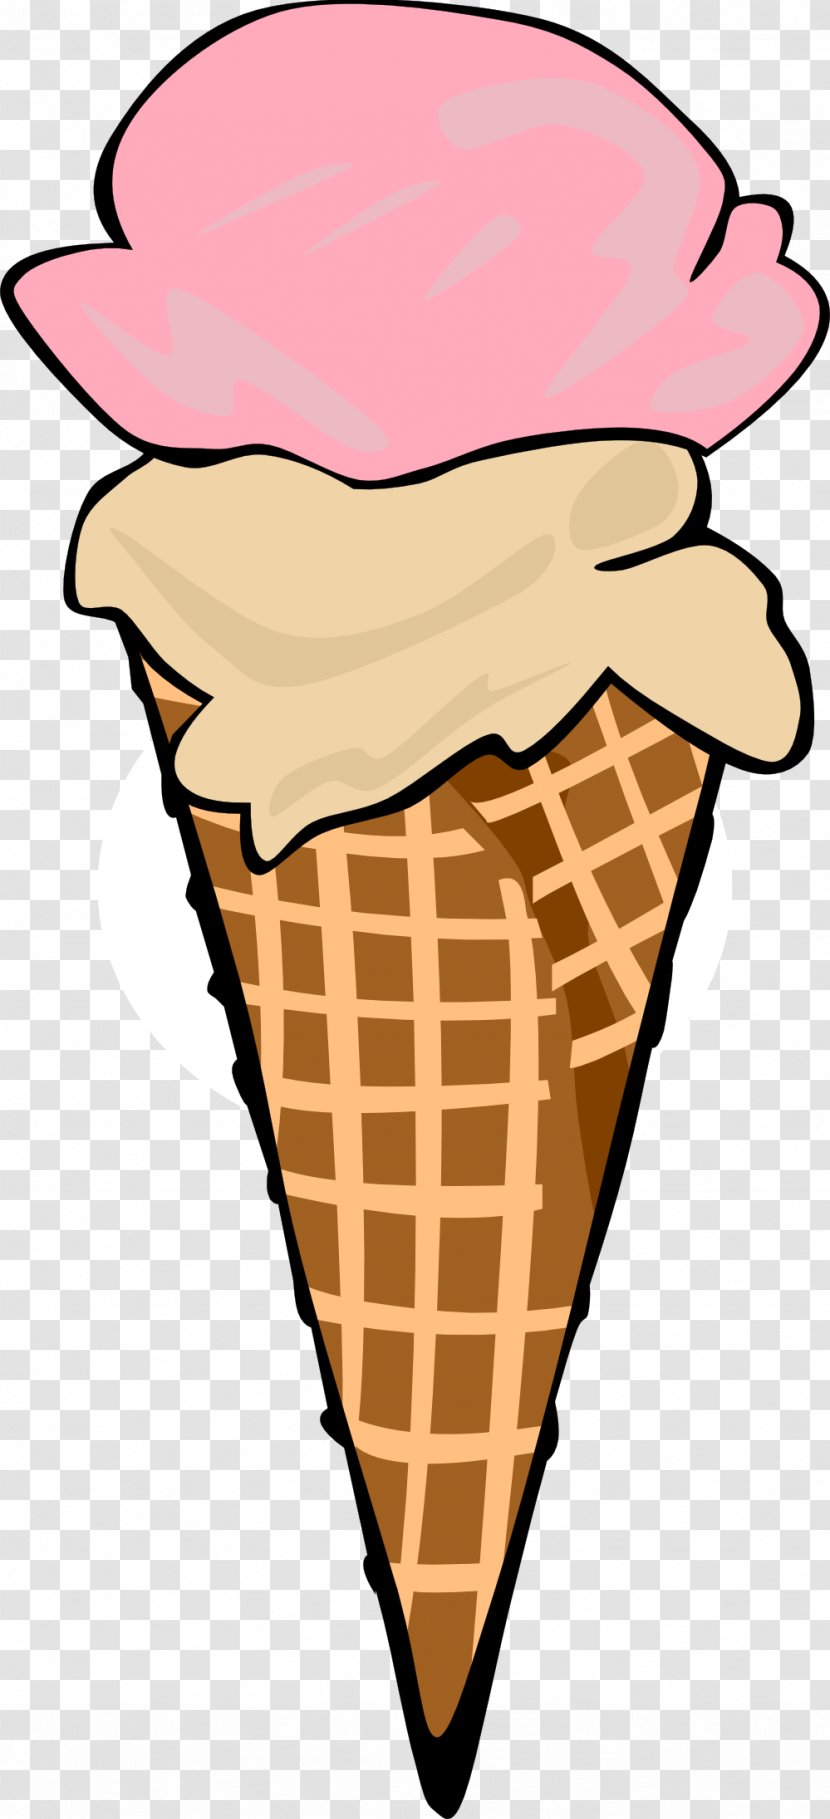 Ice Cream Cone Sundae Chocolate - Vanilla - Picture Of A Transparent PNG